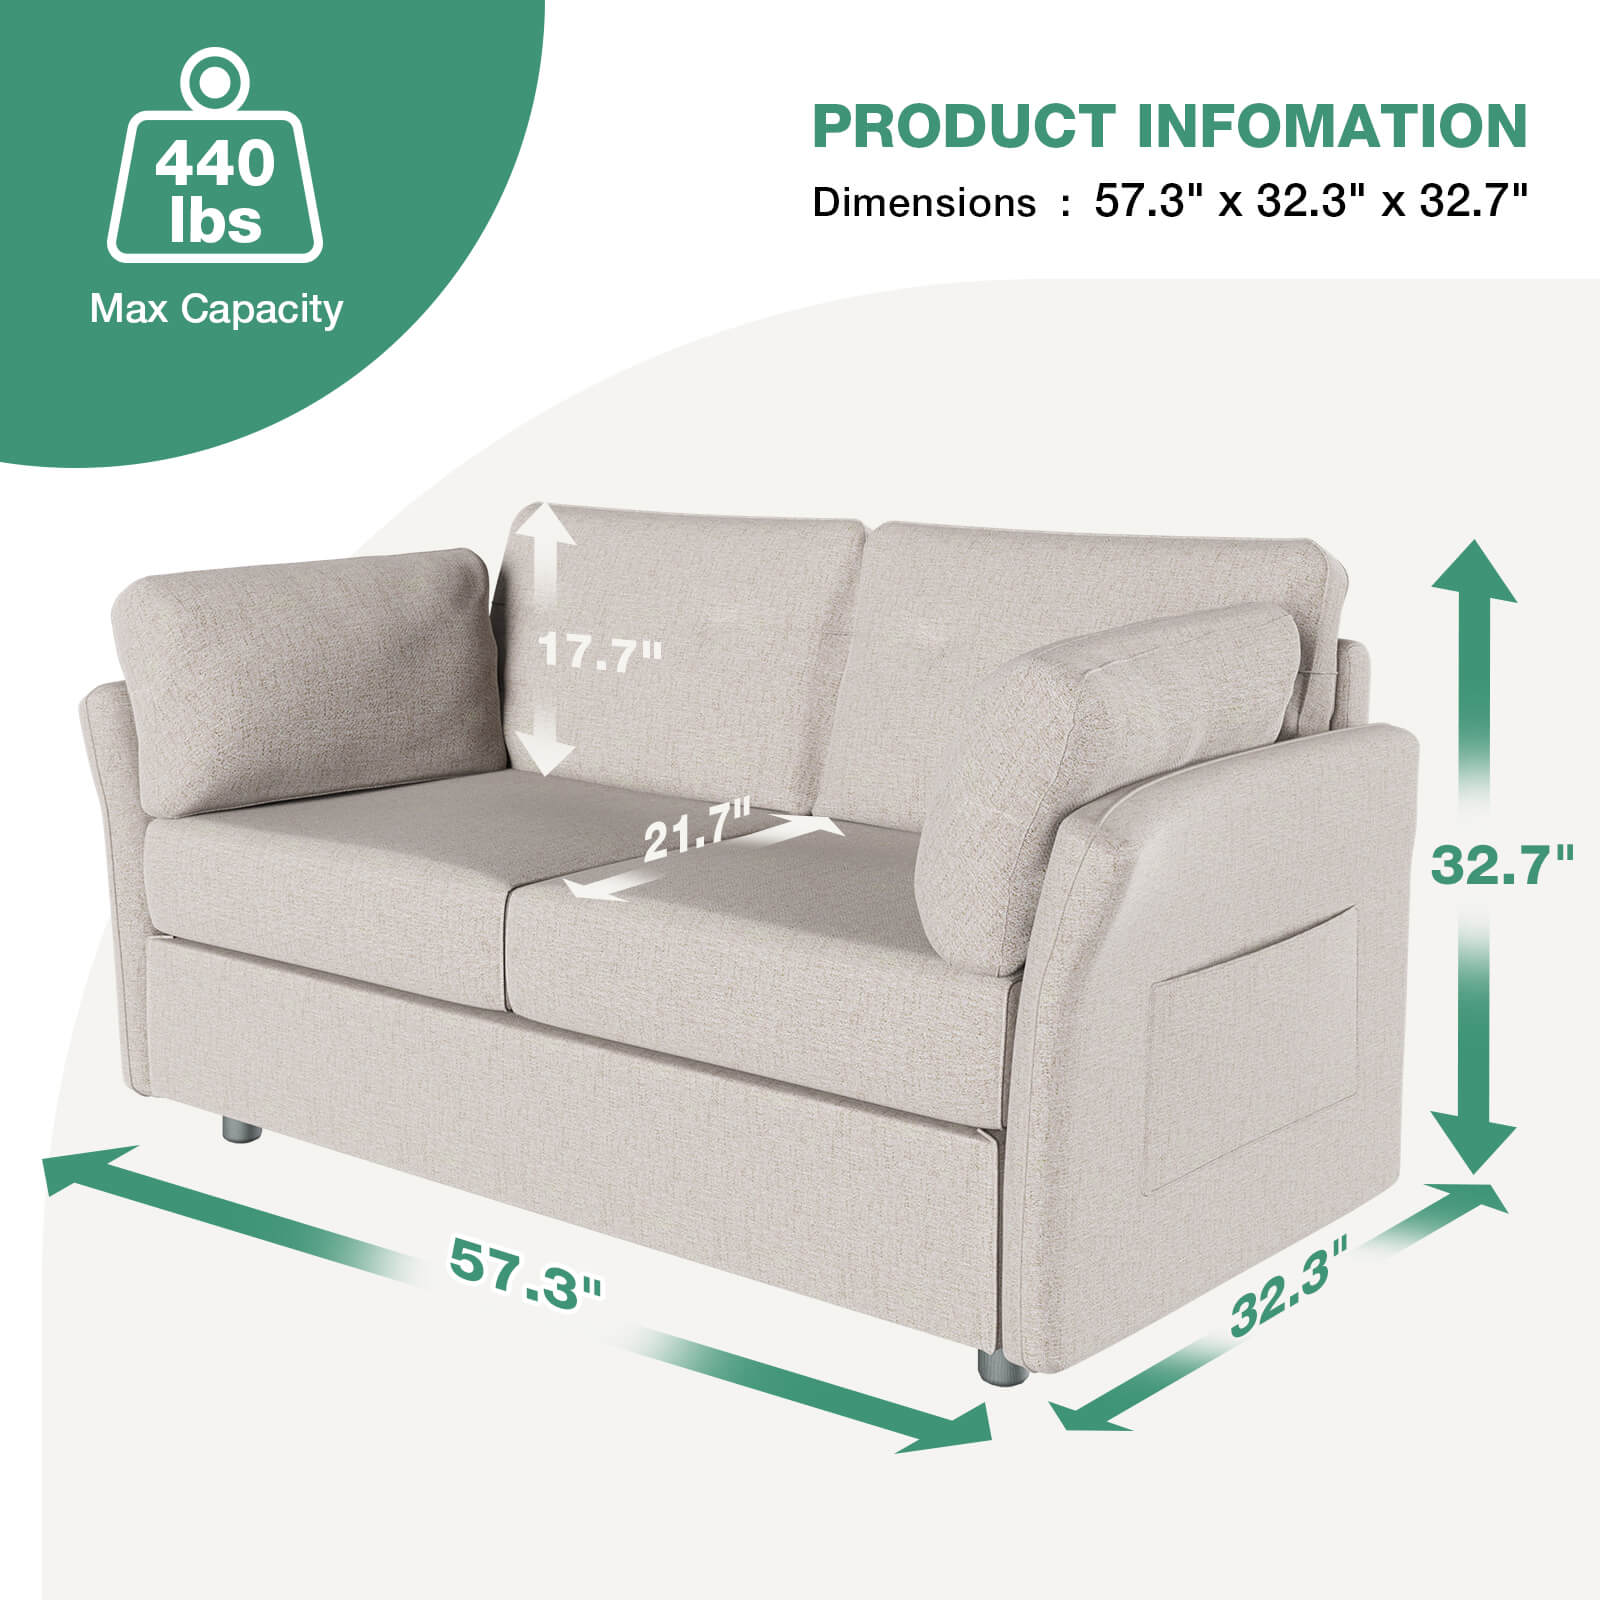 Novilla KIVI 2 Seater Sofa